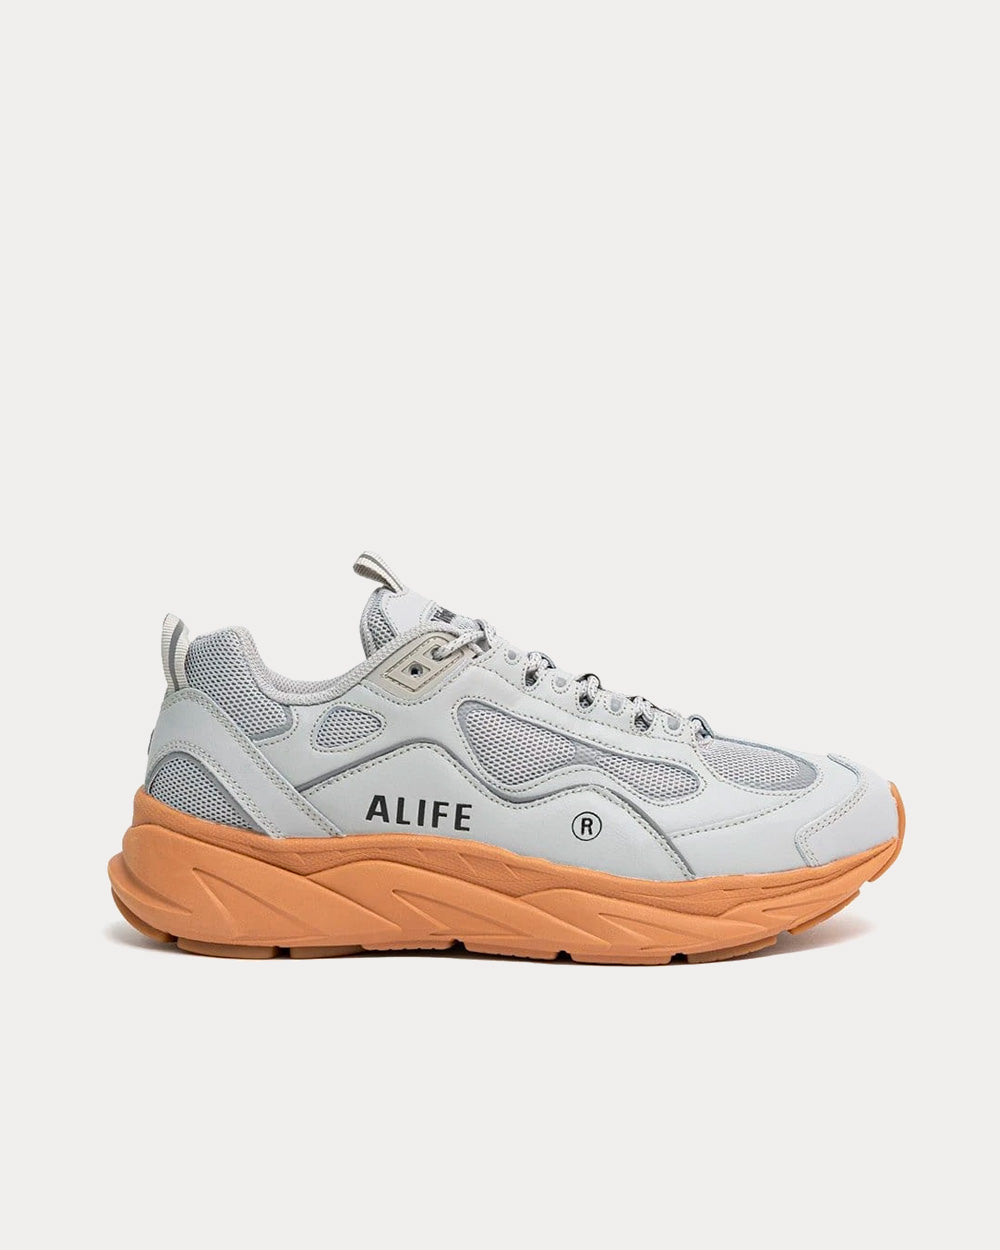 FILA x Alife Trigate Low Sneak Top - Peace Sneakers in Grey